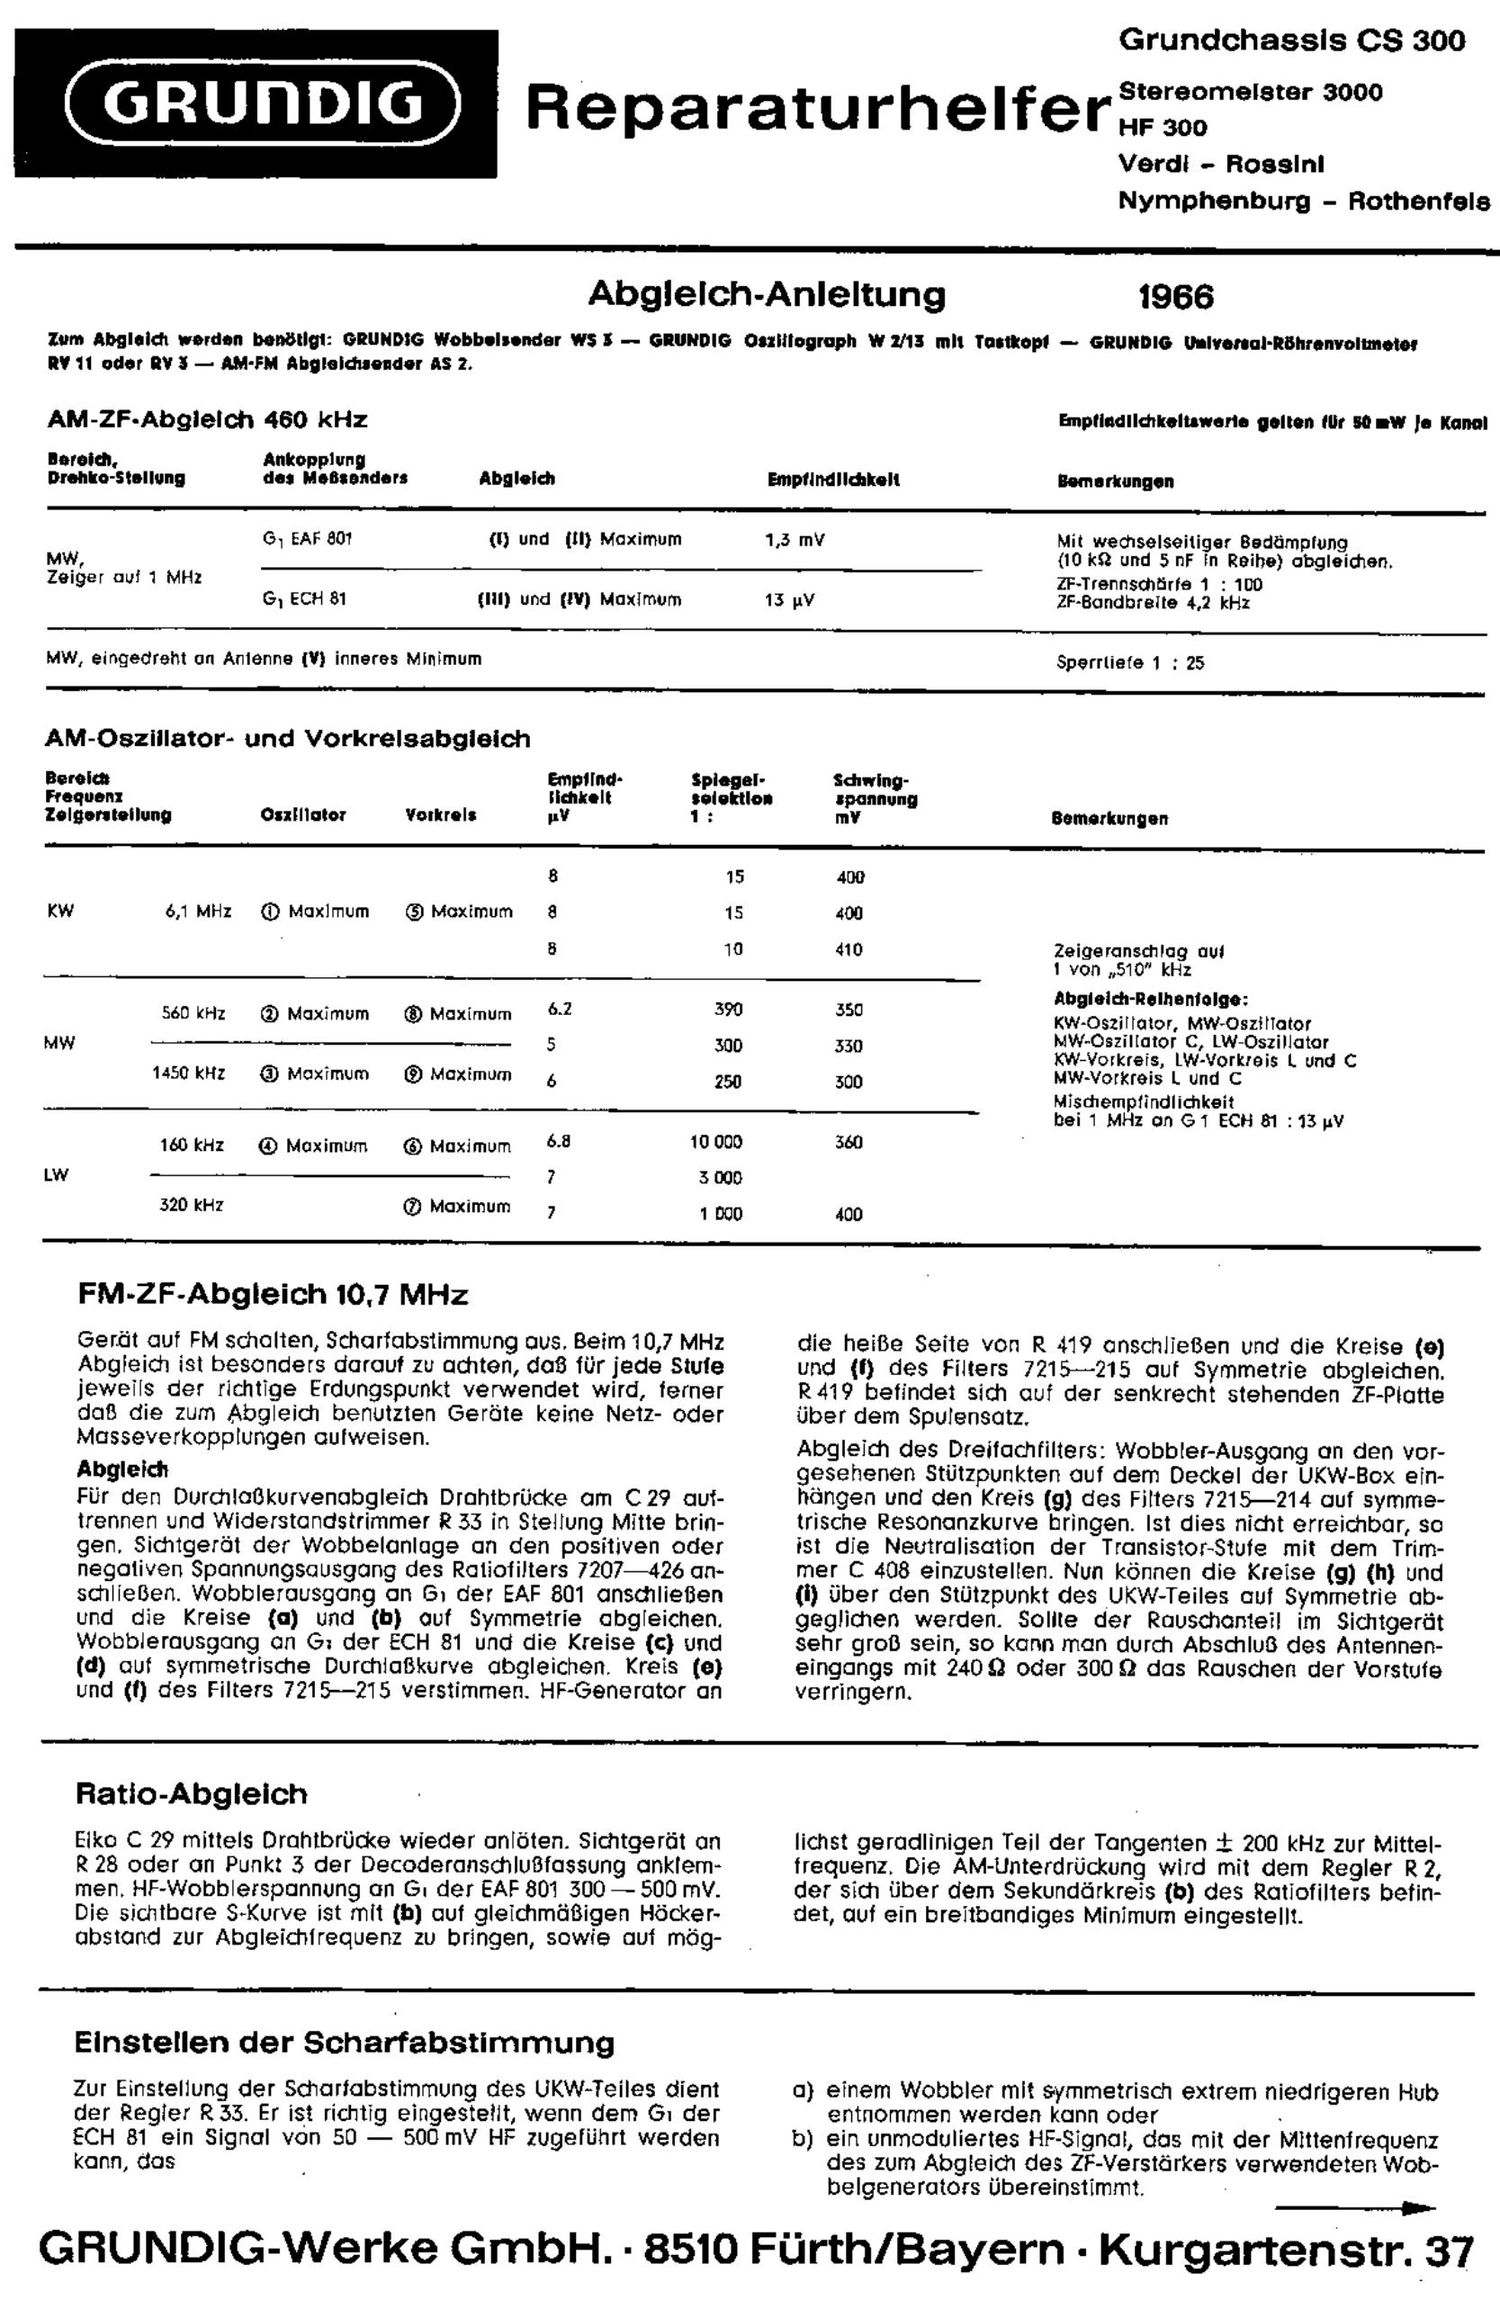 Grundig Stereomeister 3000 Service Manual